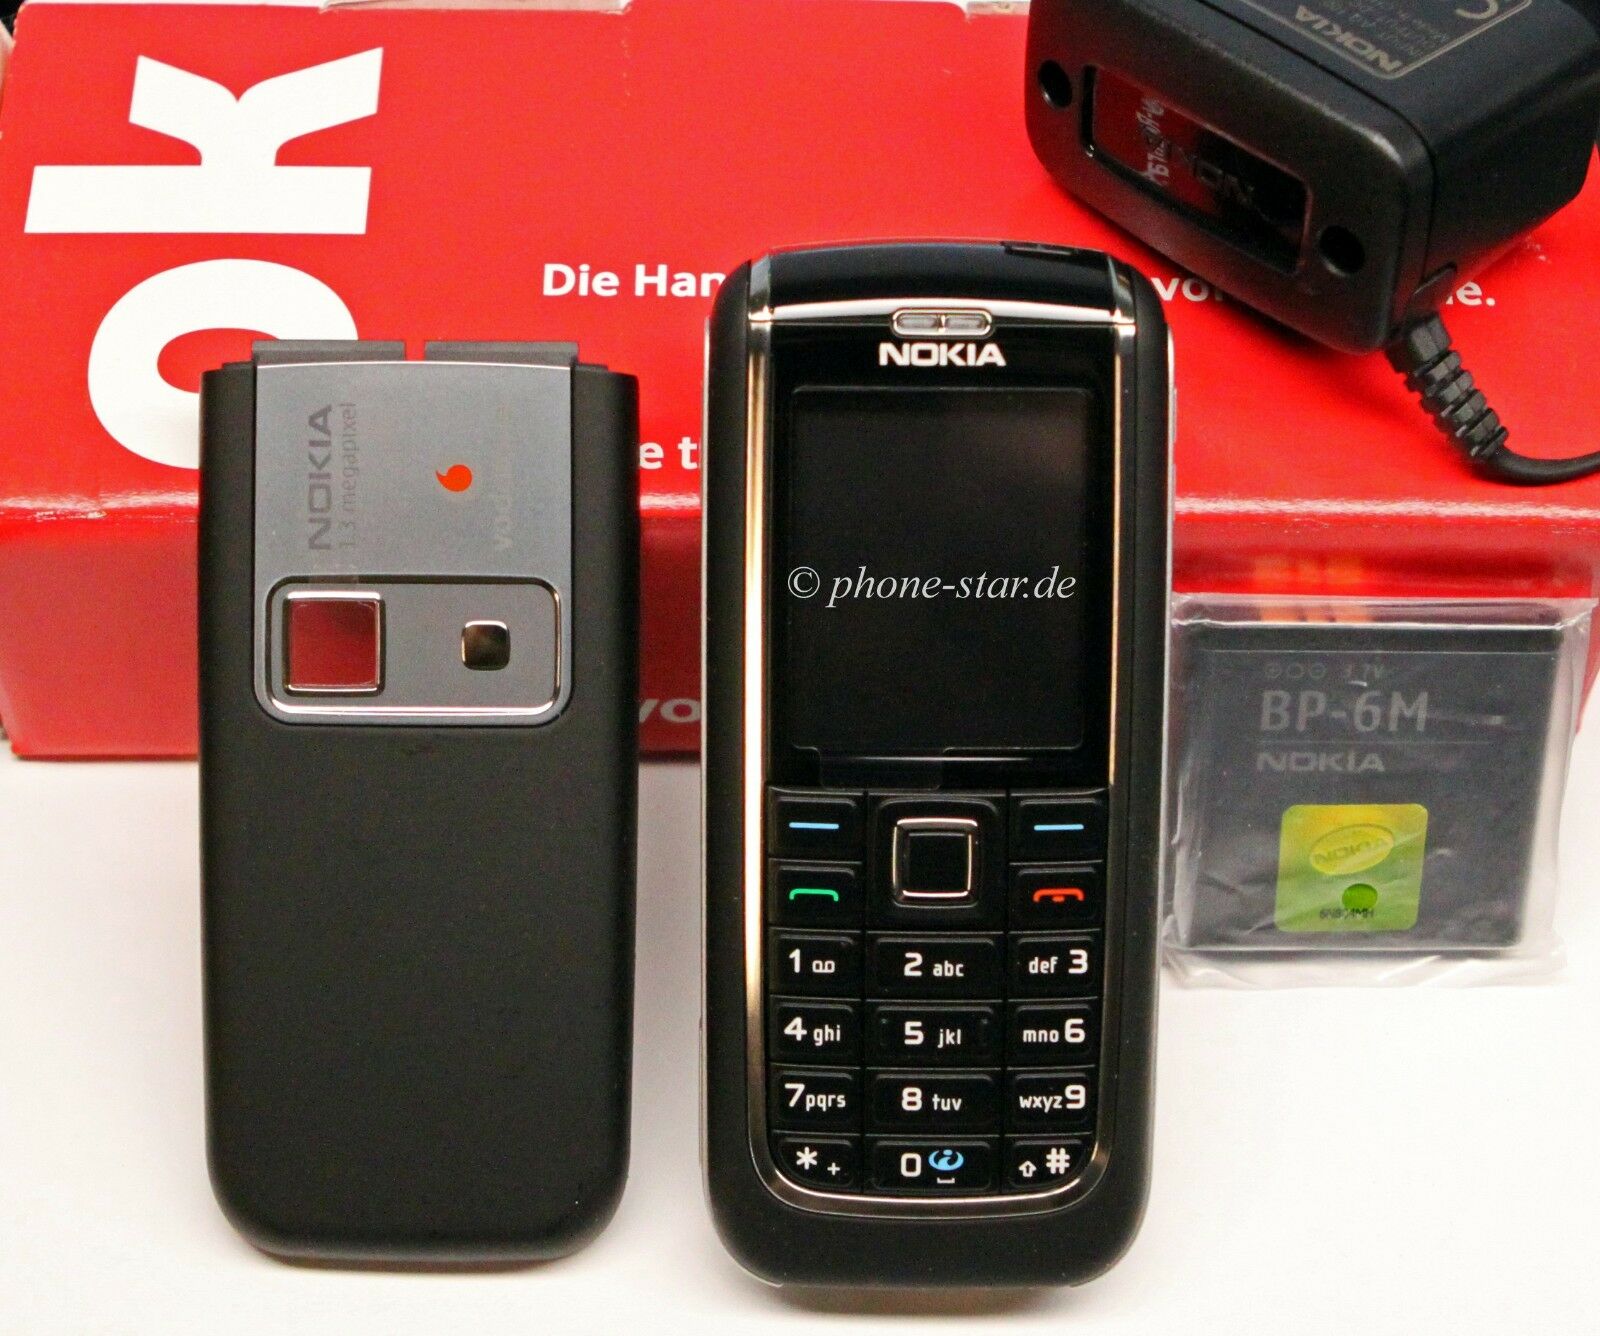 Nokia 6151 Tasten-Handy Mobile Phone Simlockfrei Kamera Bluetooth GPRS Neu New in Box